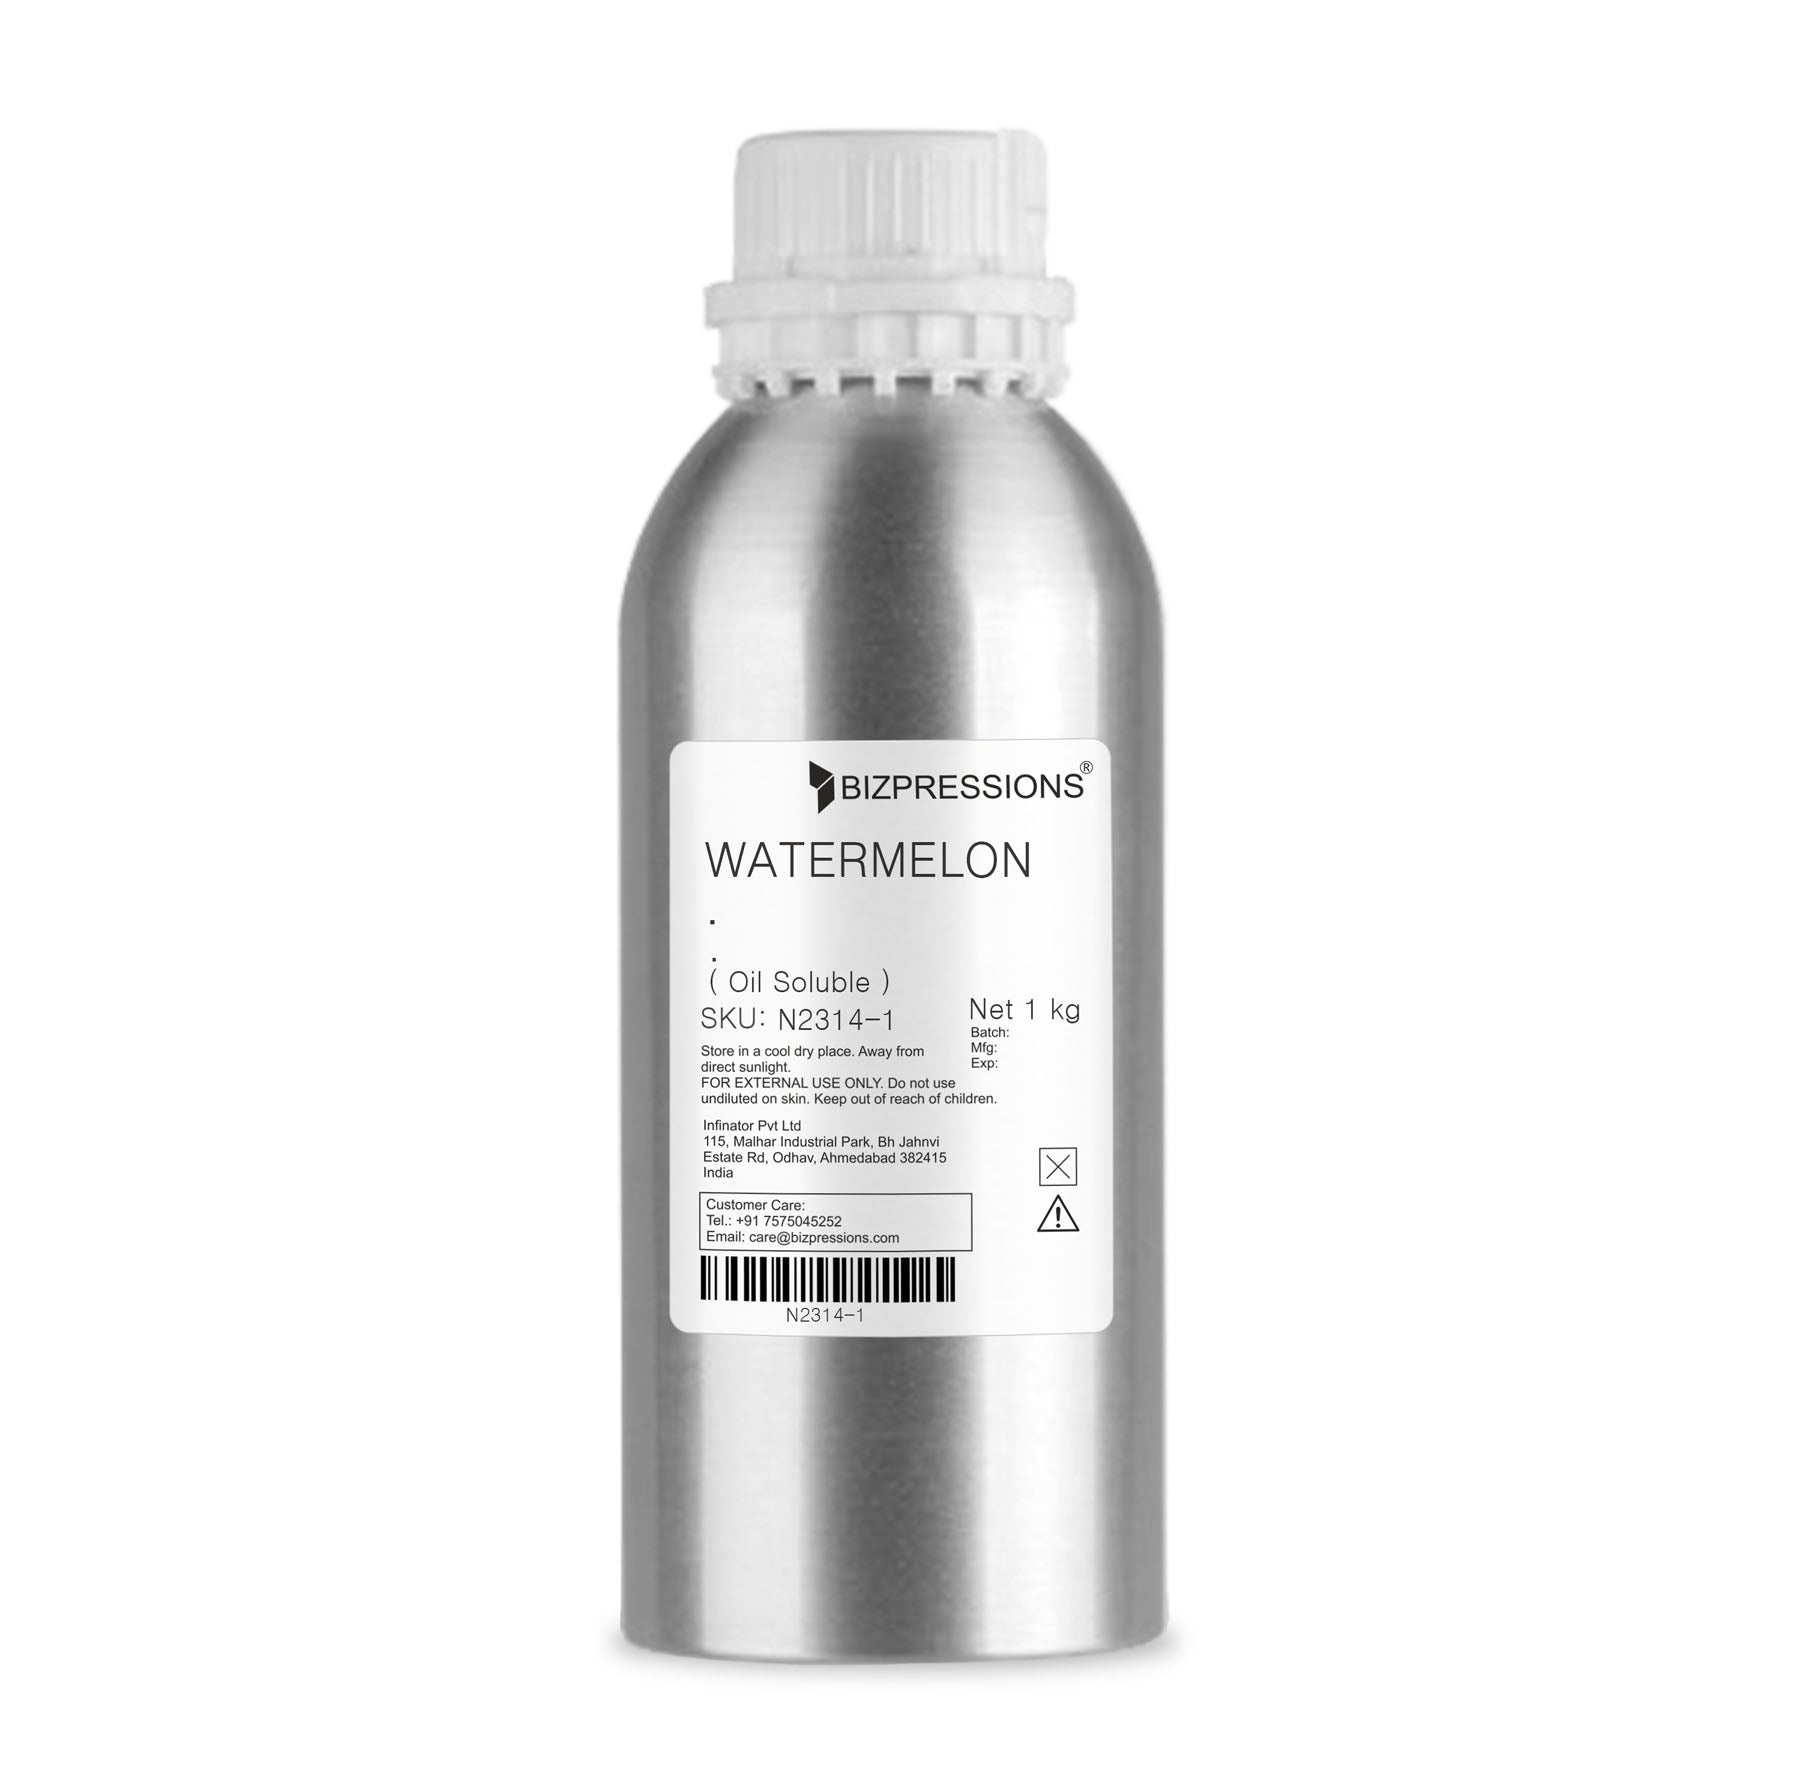 WATERMELON - Fragrance ( Oil Soluble ) - 1 kg